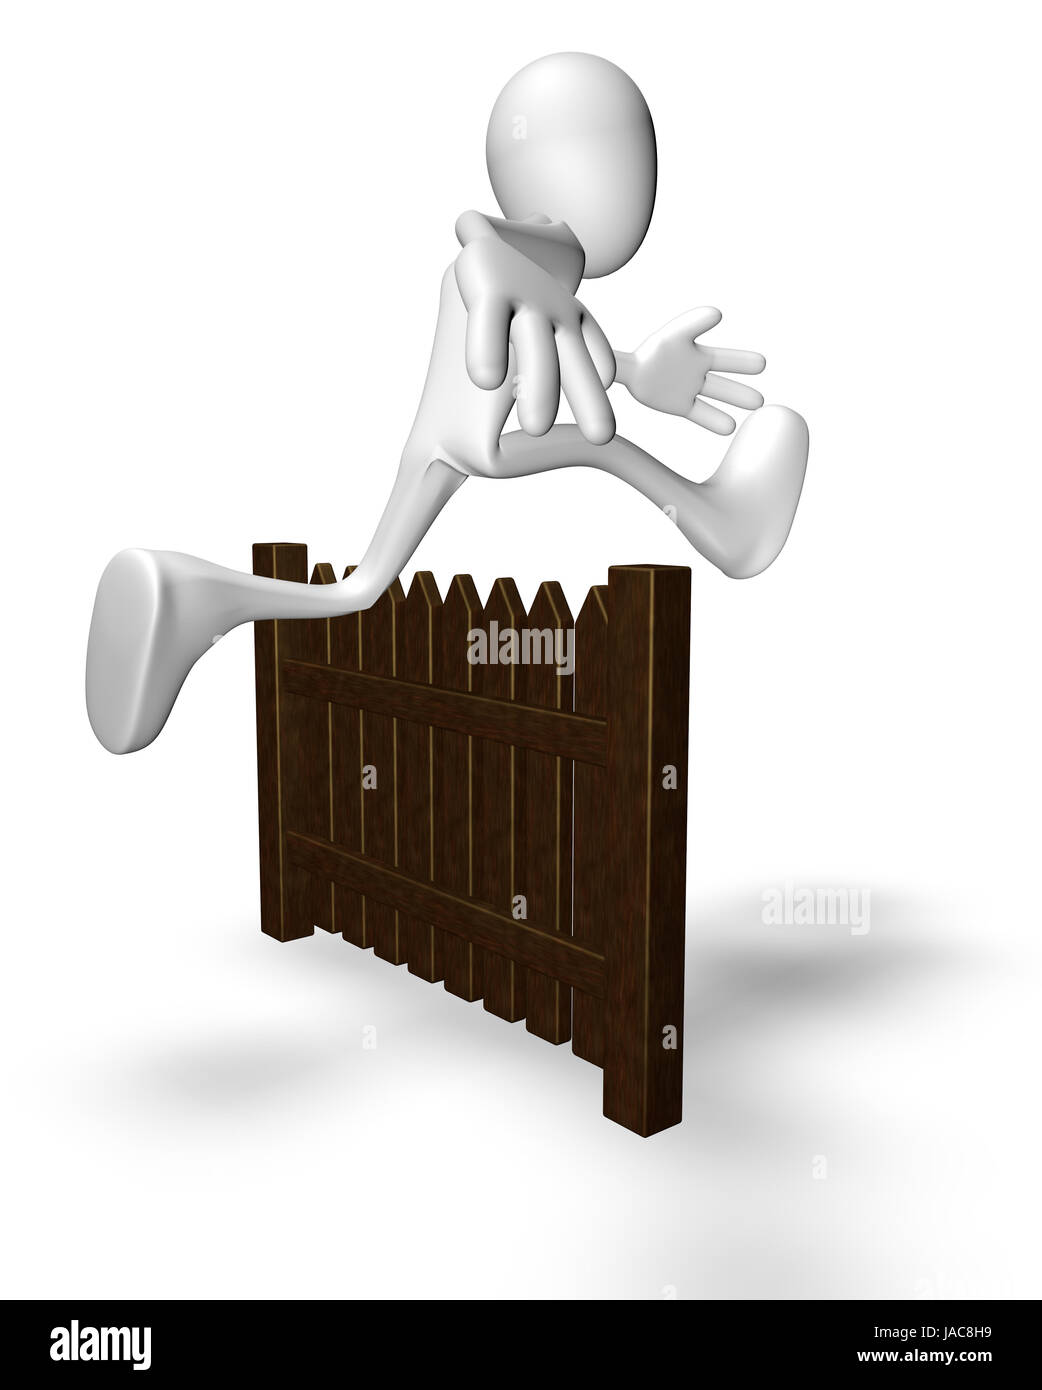 cartoonfigur springt über gartenzaun - 3d illustration Stock Photo